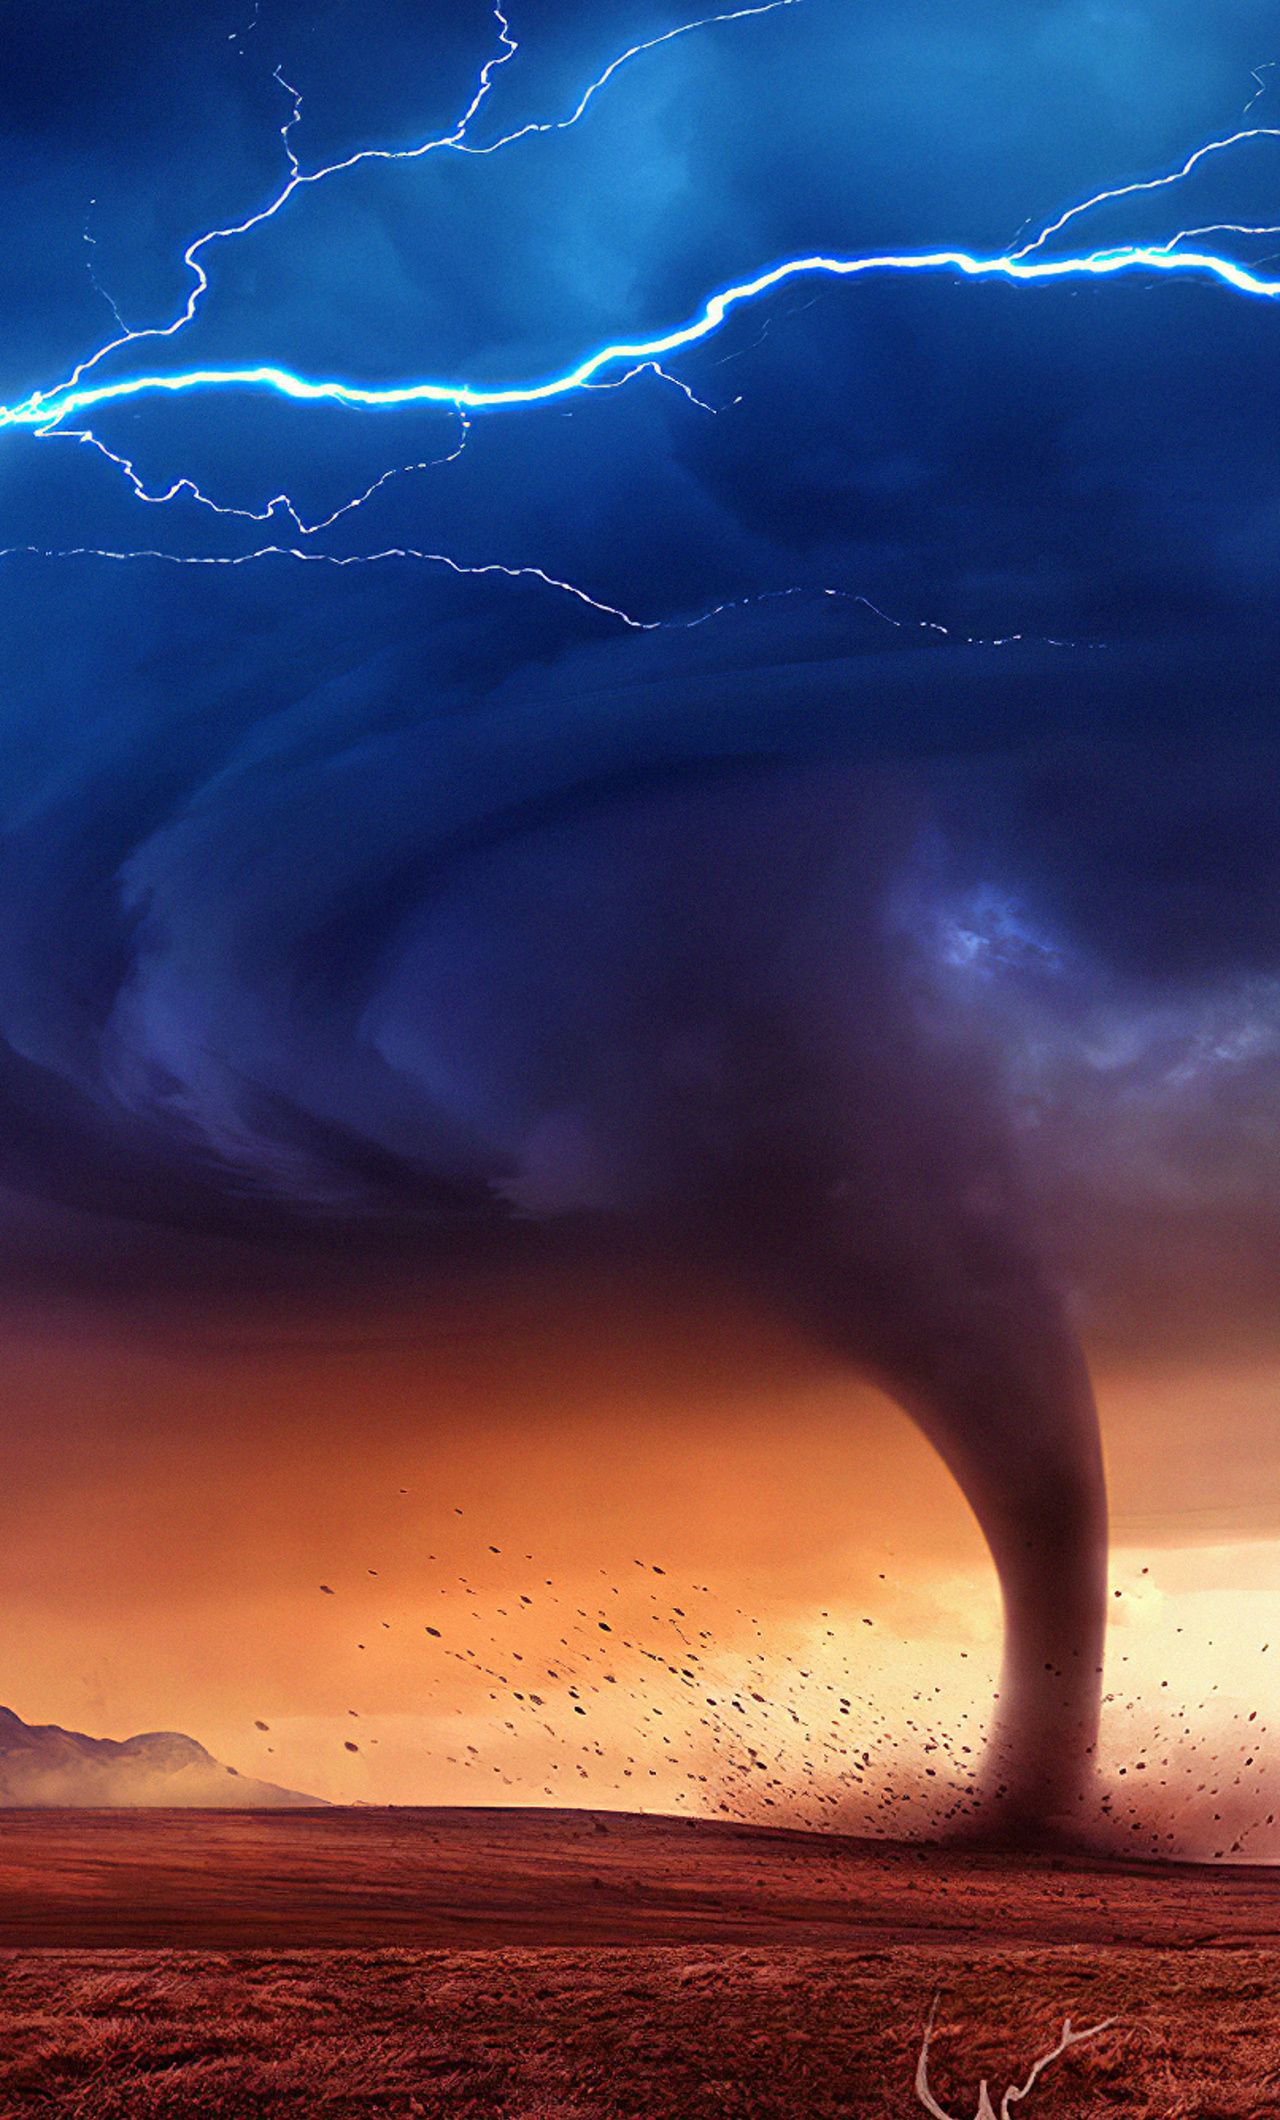 Tornado Art iPhone HD 4k Wallpaper, Image